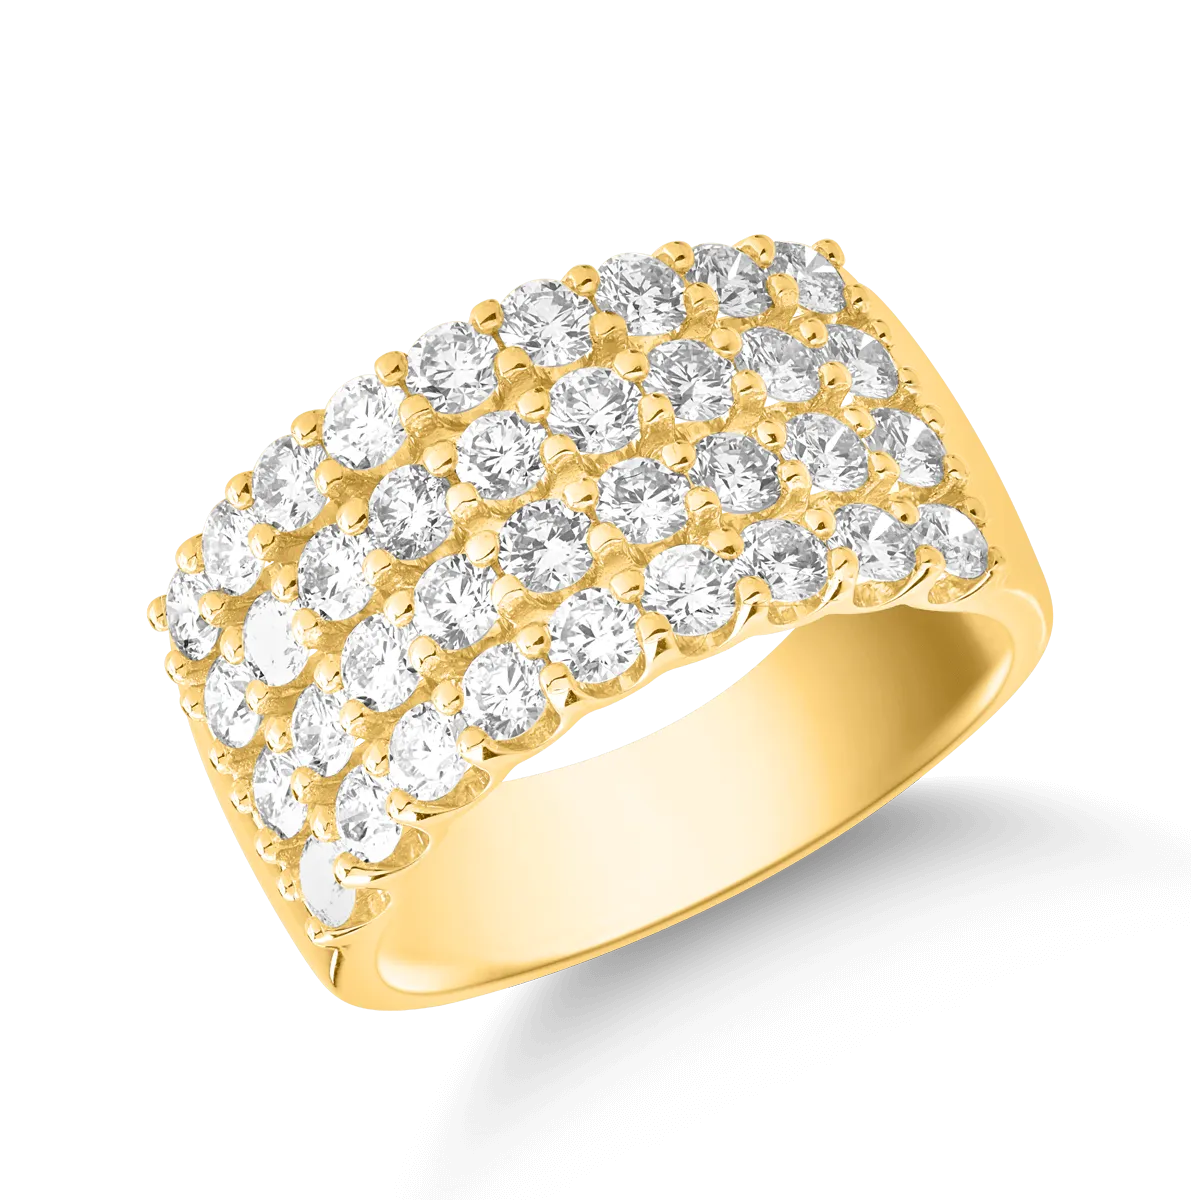 Inel din aur galben de 18K cu diamante de 2ct